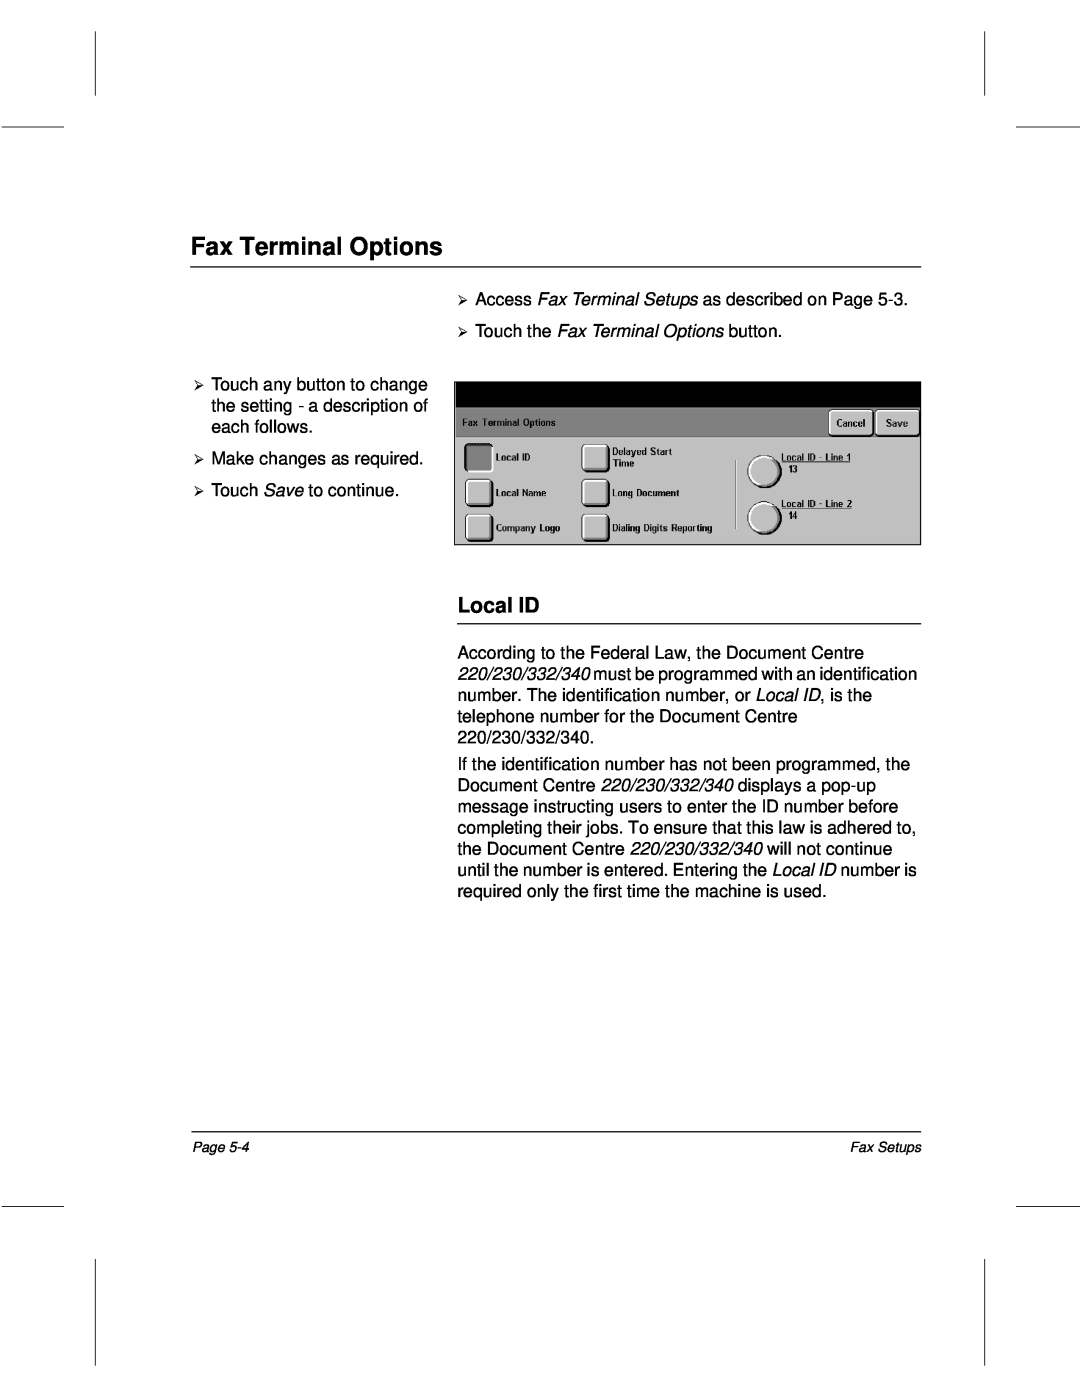 Xerox 220, 340, 332, 230 setup guide Fax Terminal Options, Local ID 